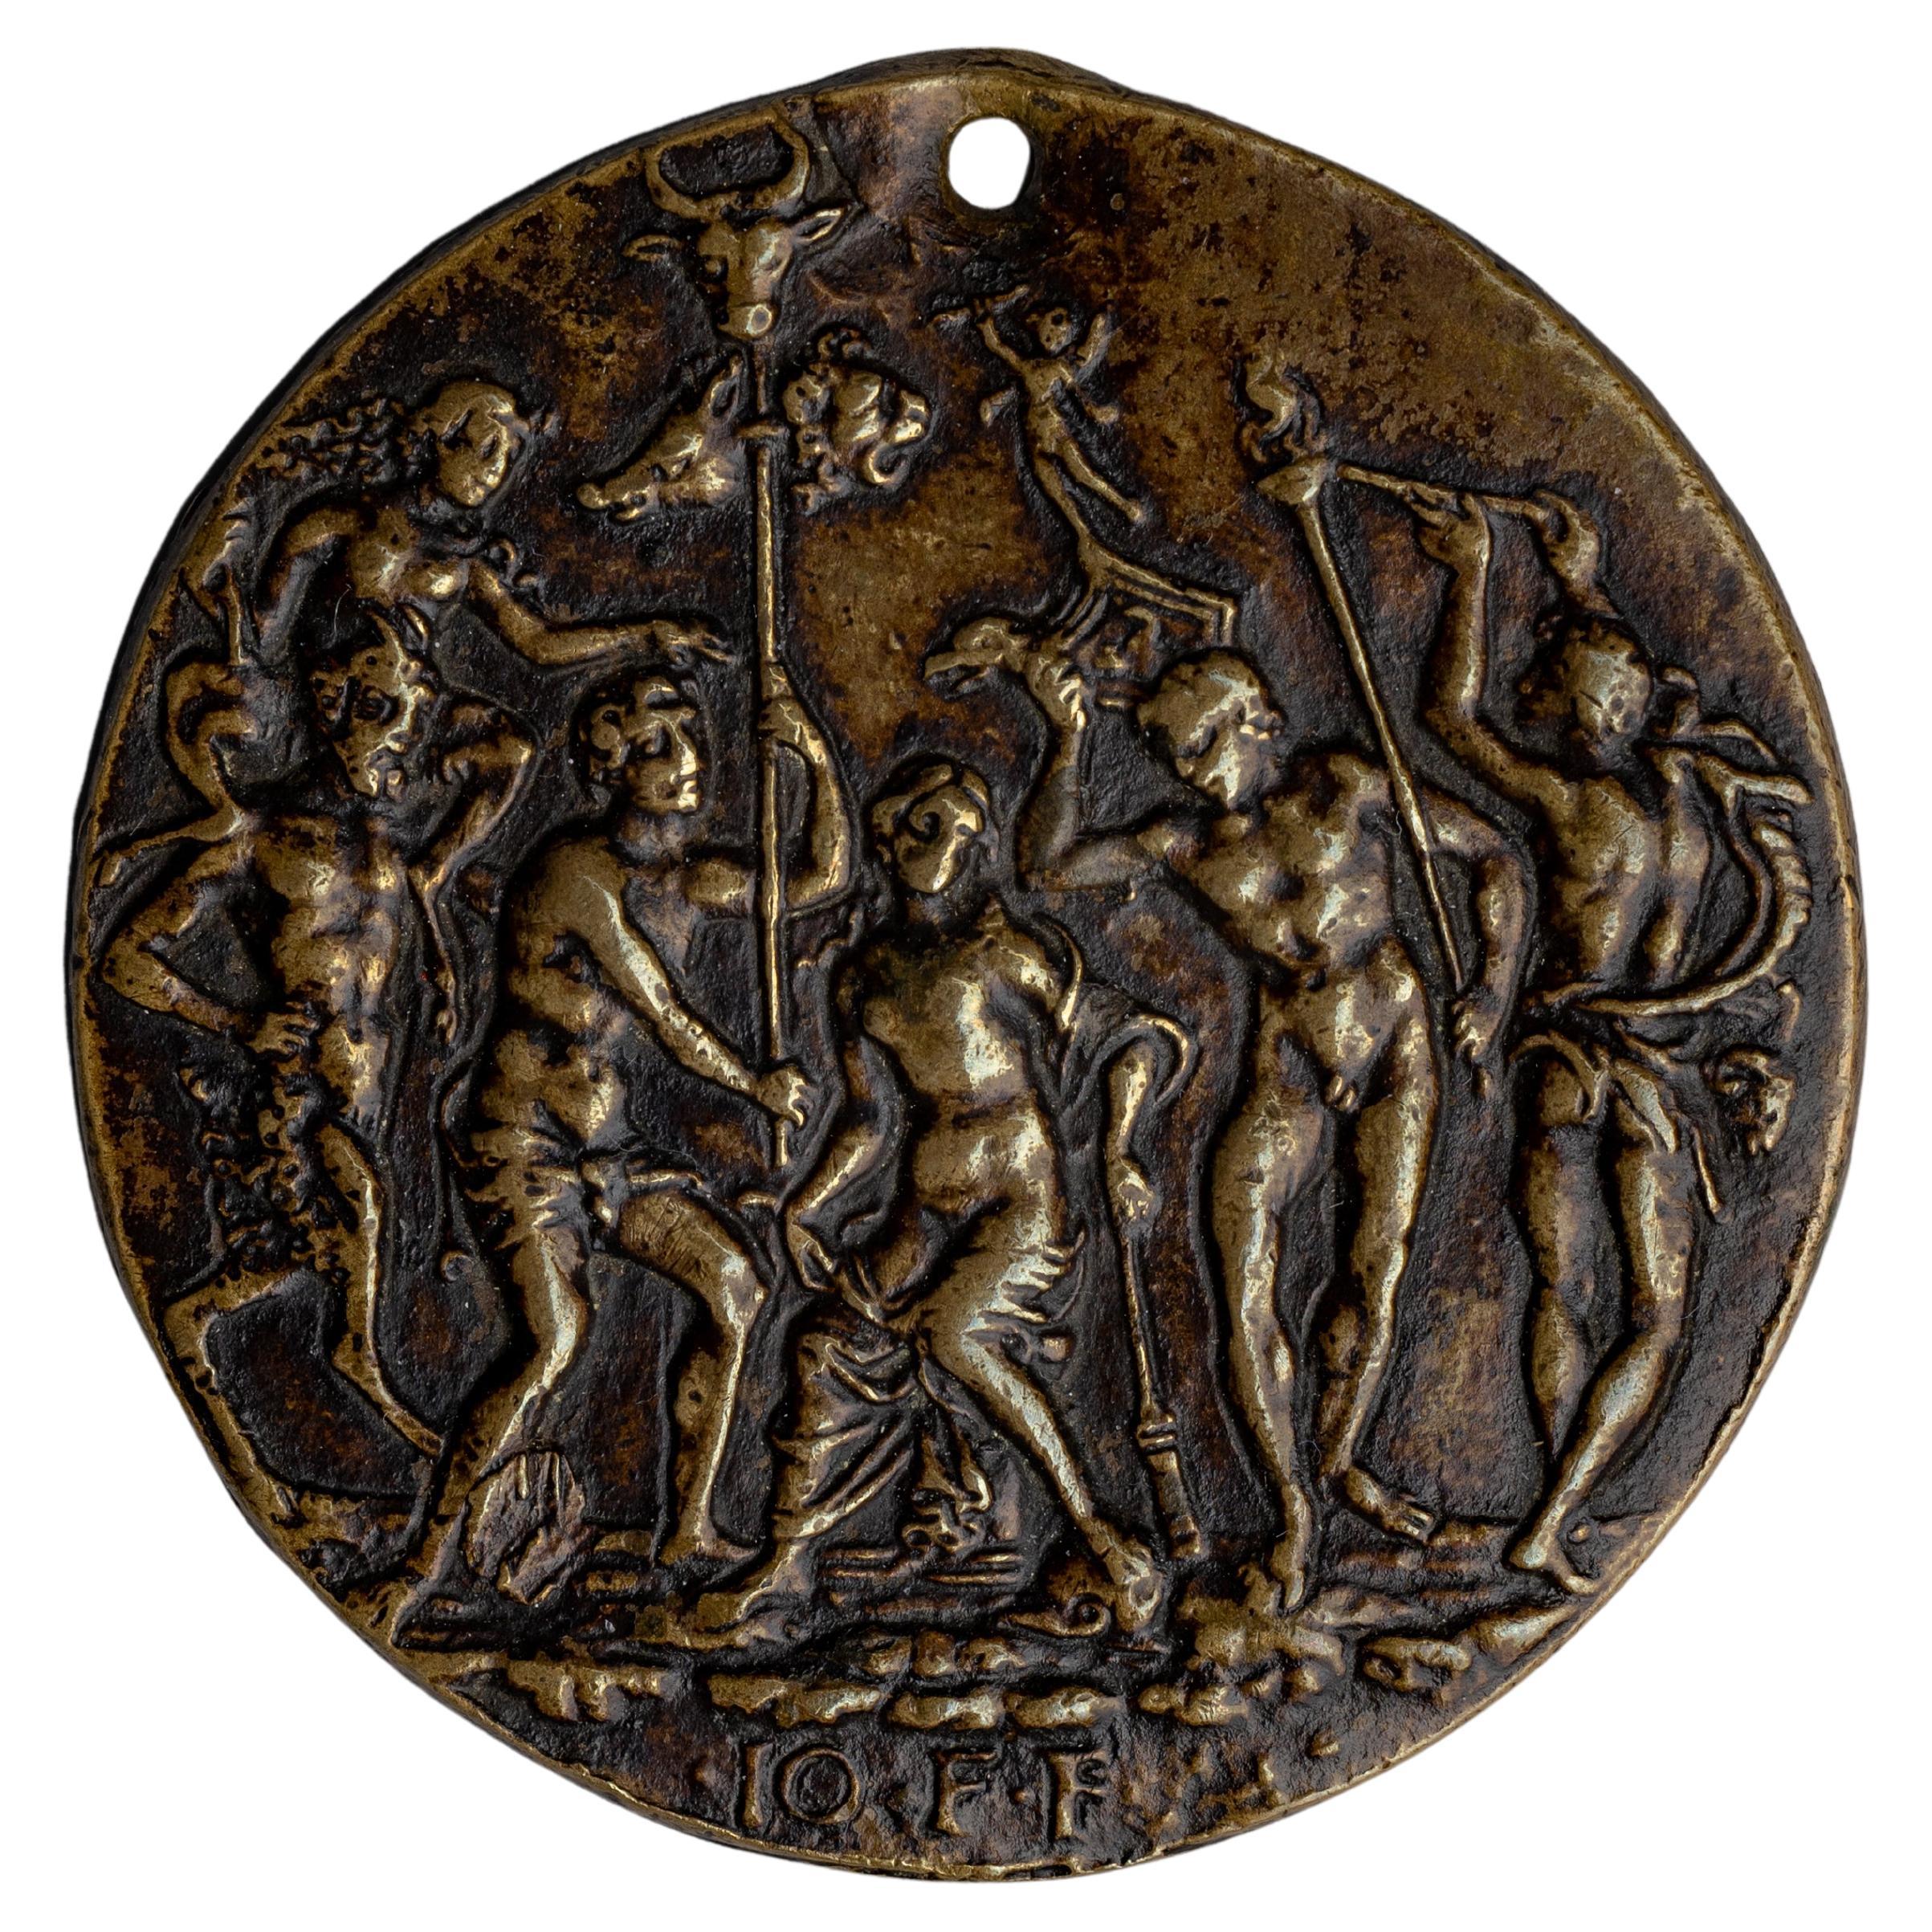 Italienisches Renaissance-Medaillon aus Bronze aus dem 15. Jahrhundert